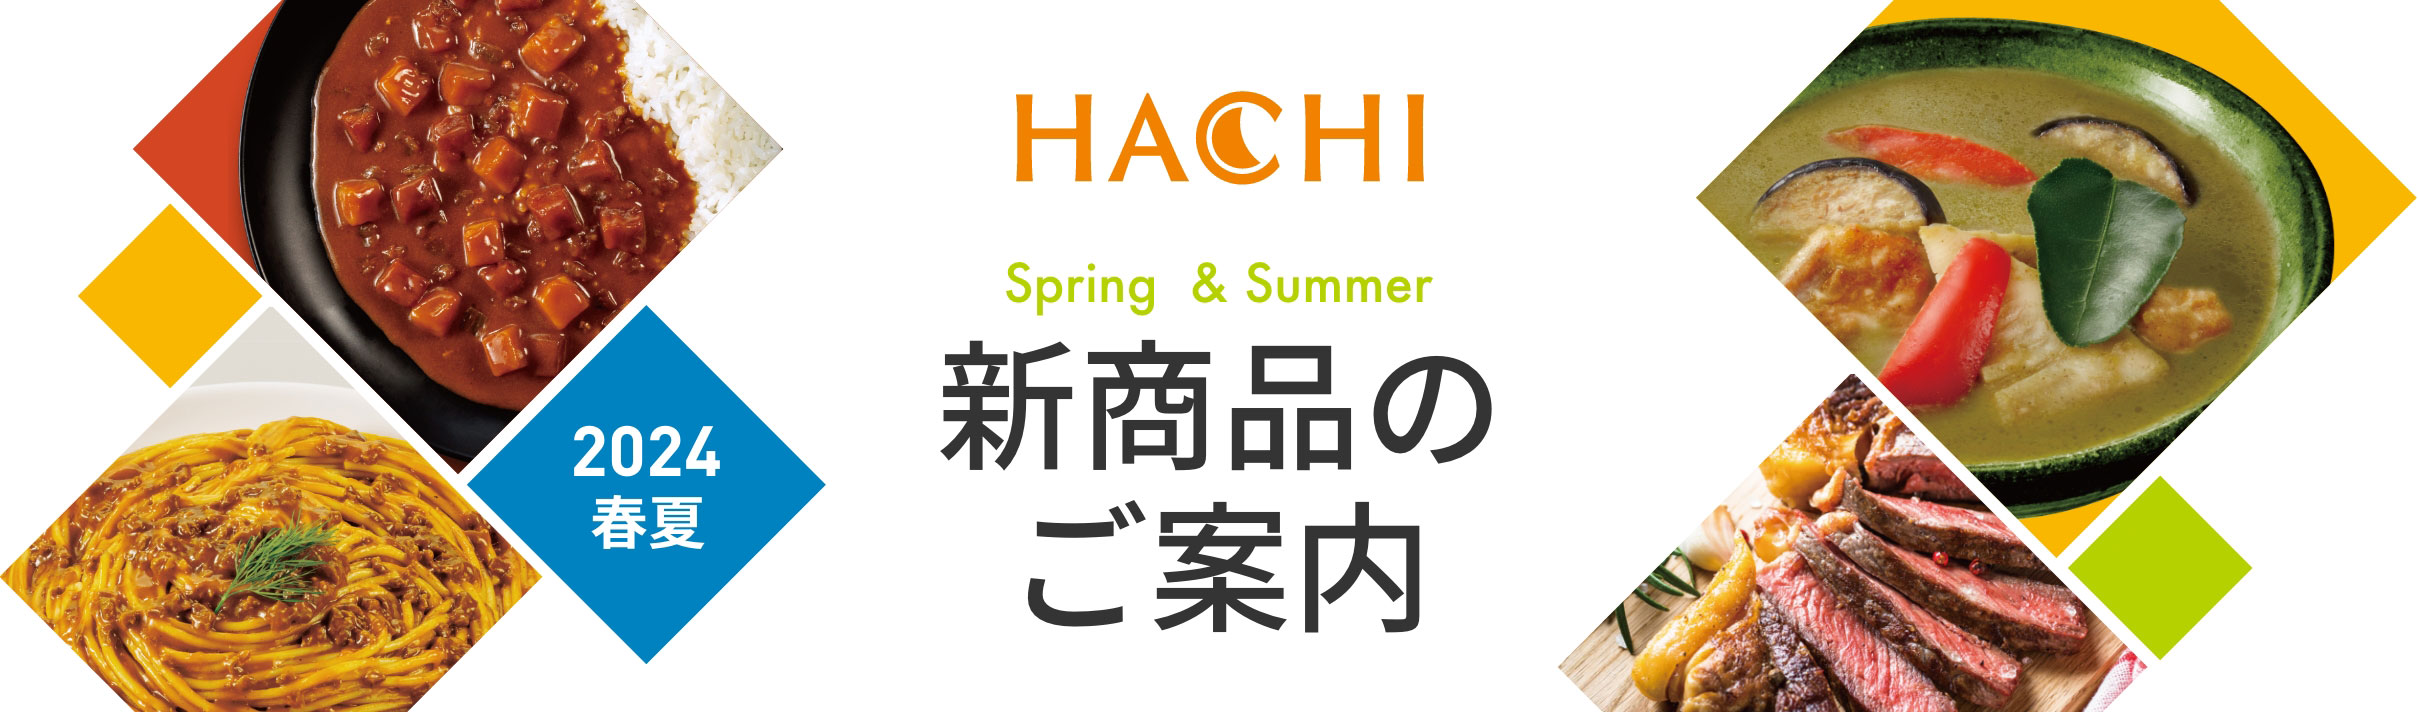 HACHI 2024春夏 Spring&Summer 新商品のご案内